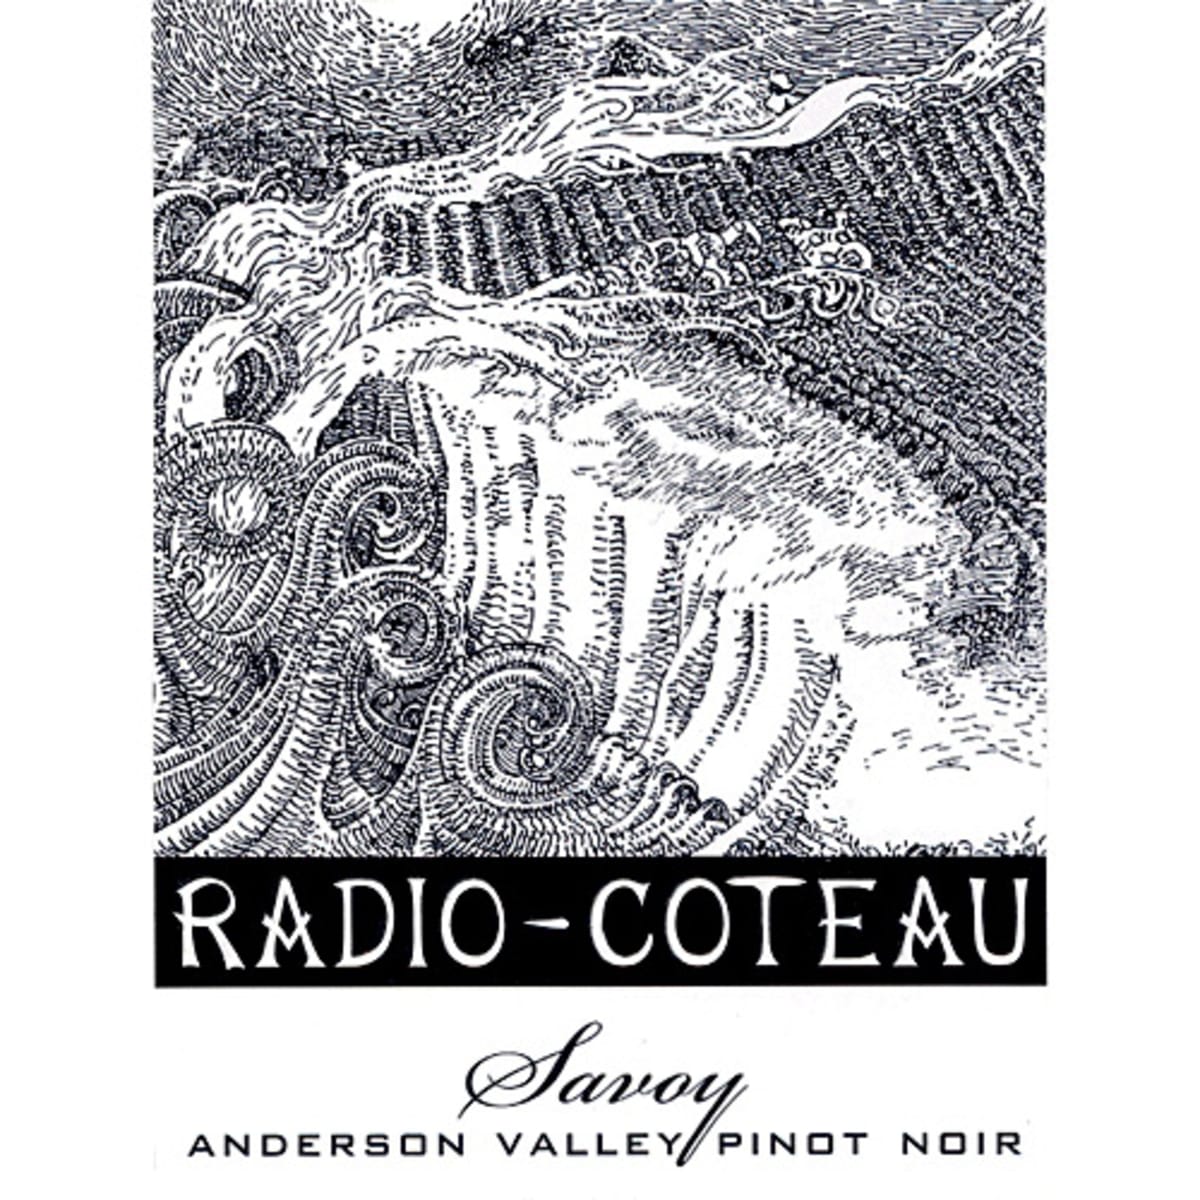 Radio-Coteau Savoy Vineyard Pinot Noir 2007 Front Label